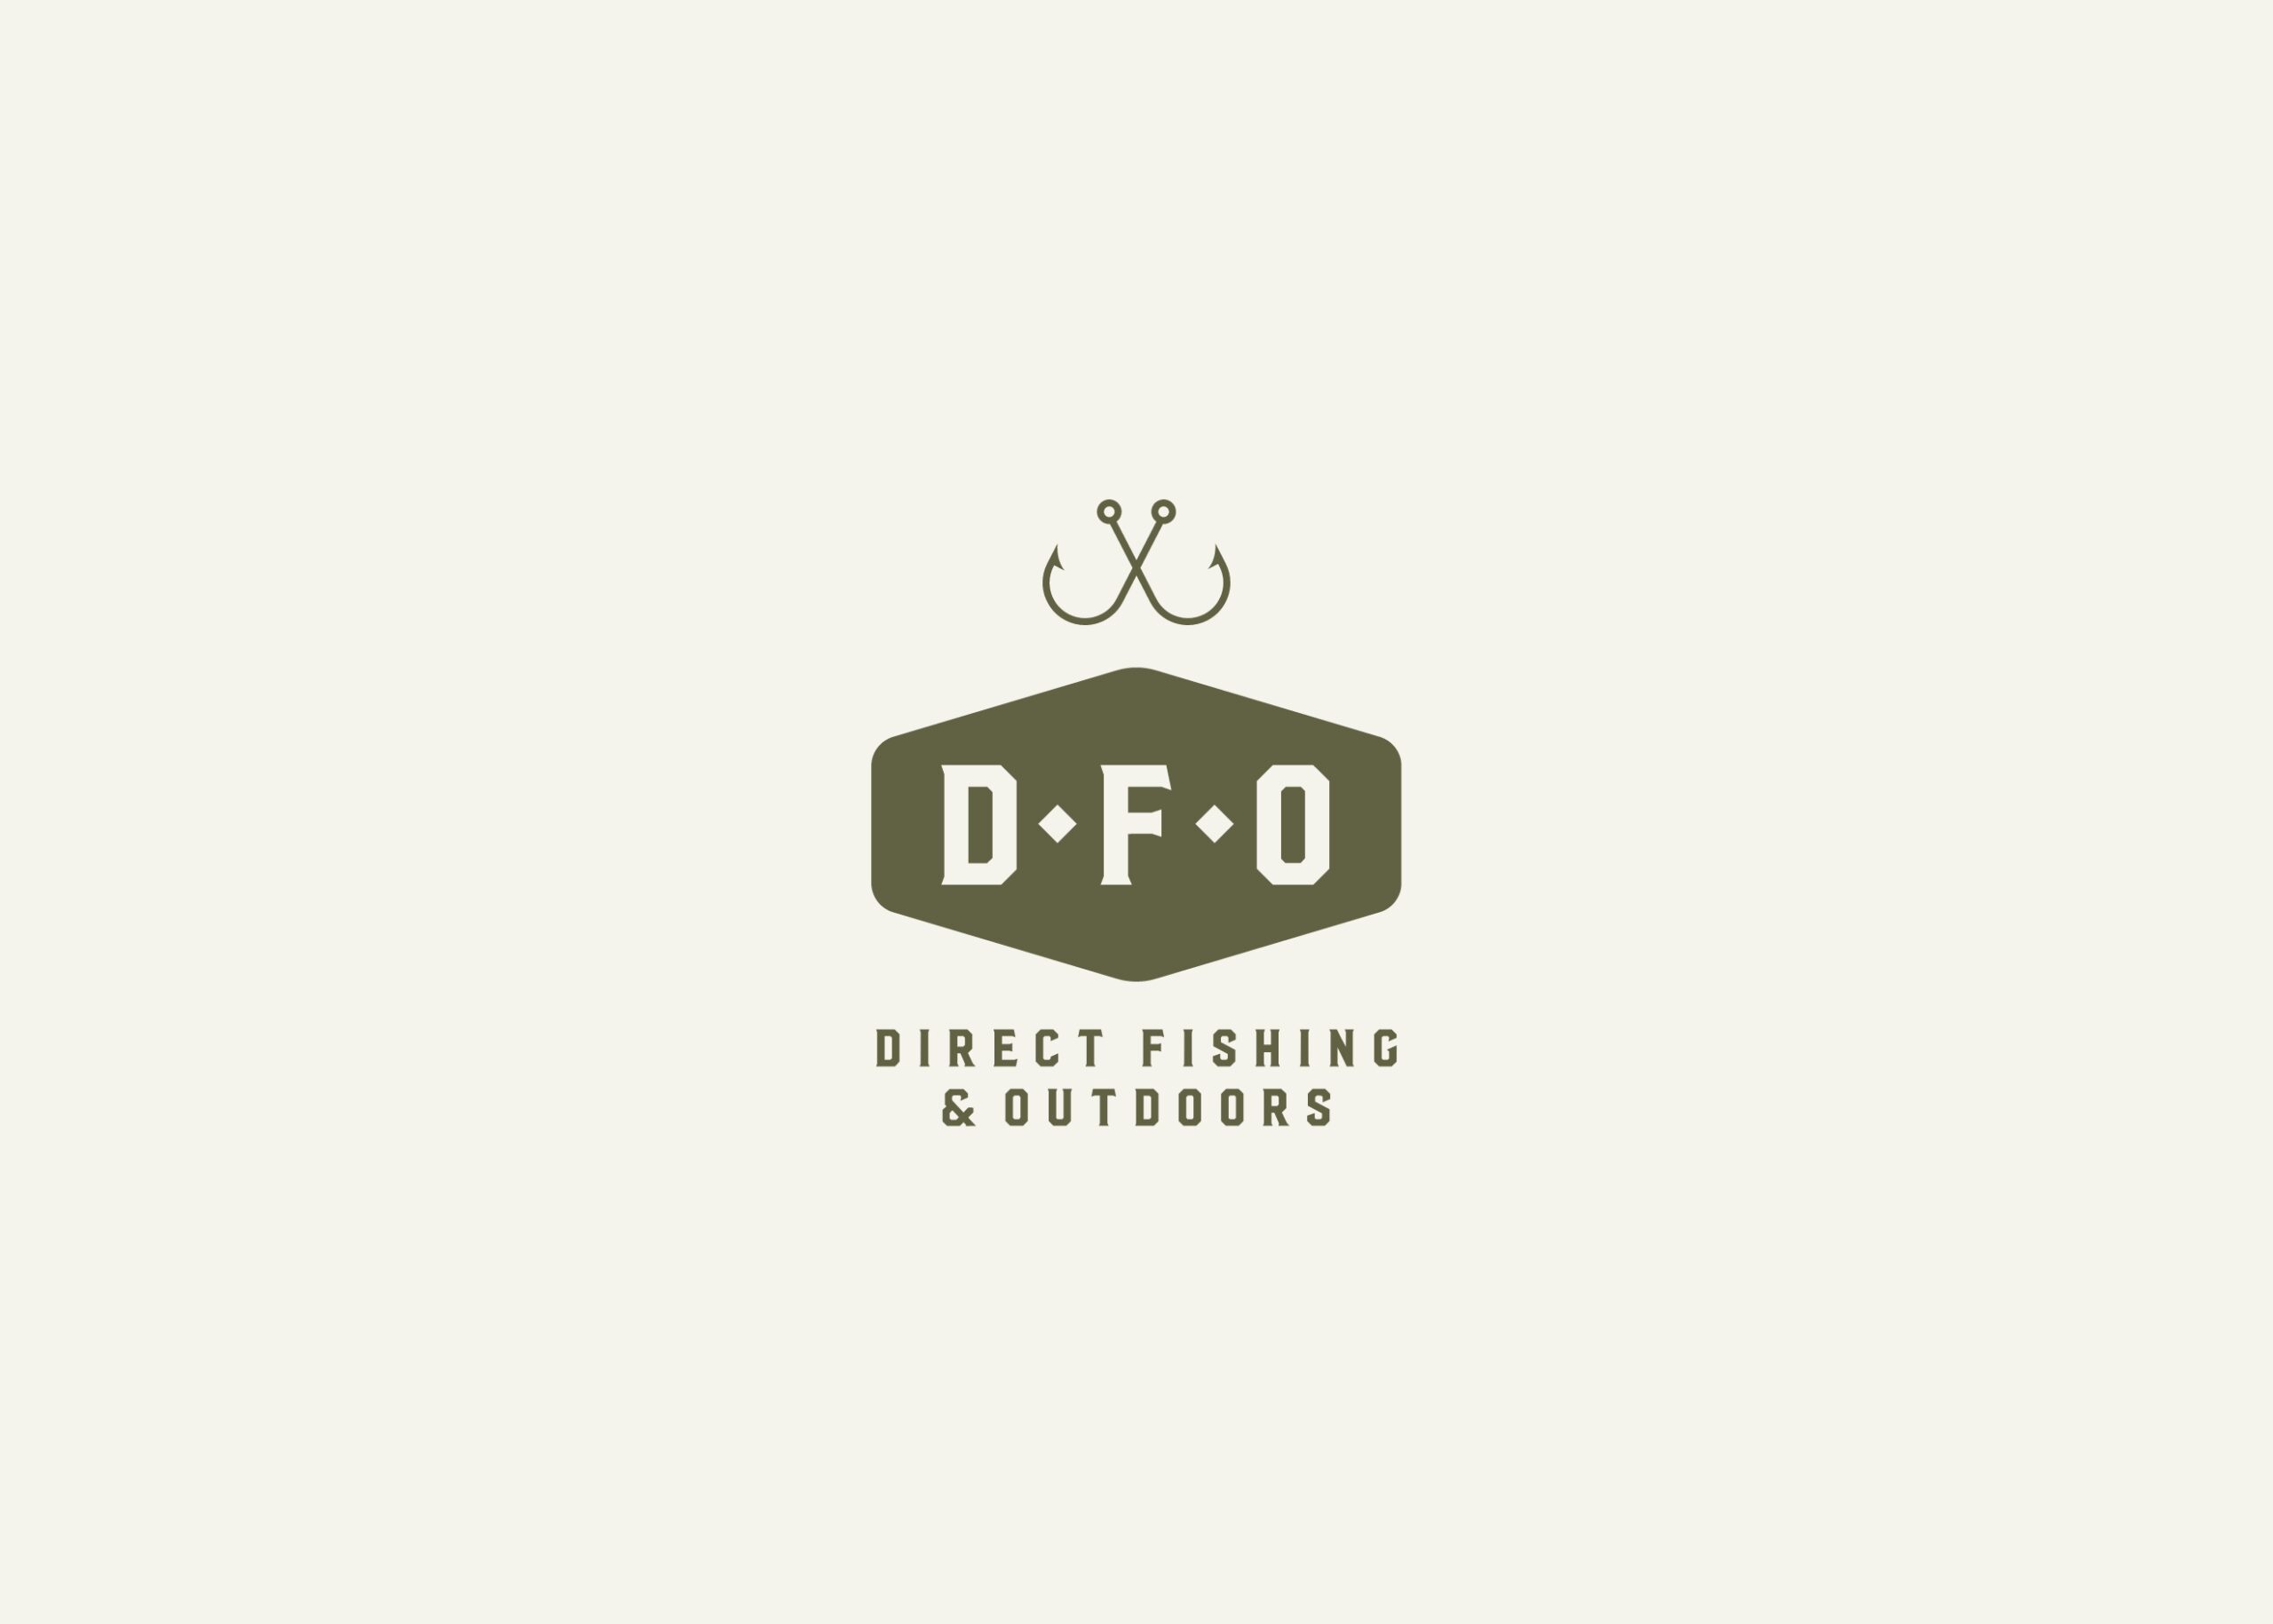 DFO logo design by Kaliber Studio